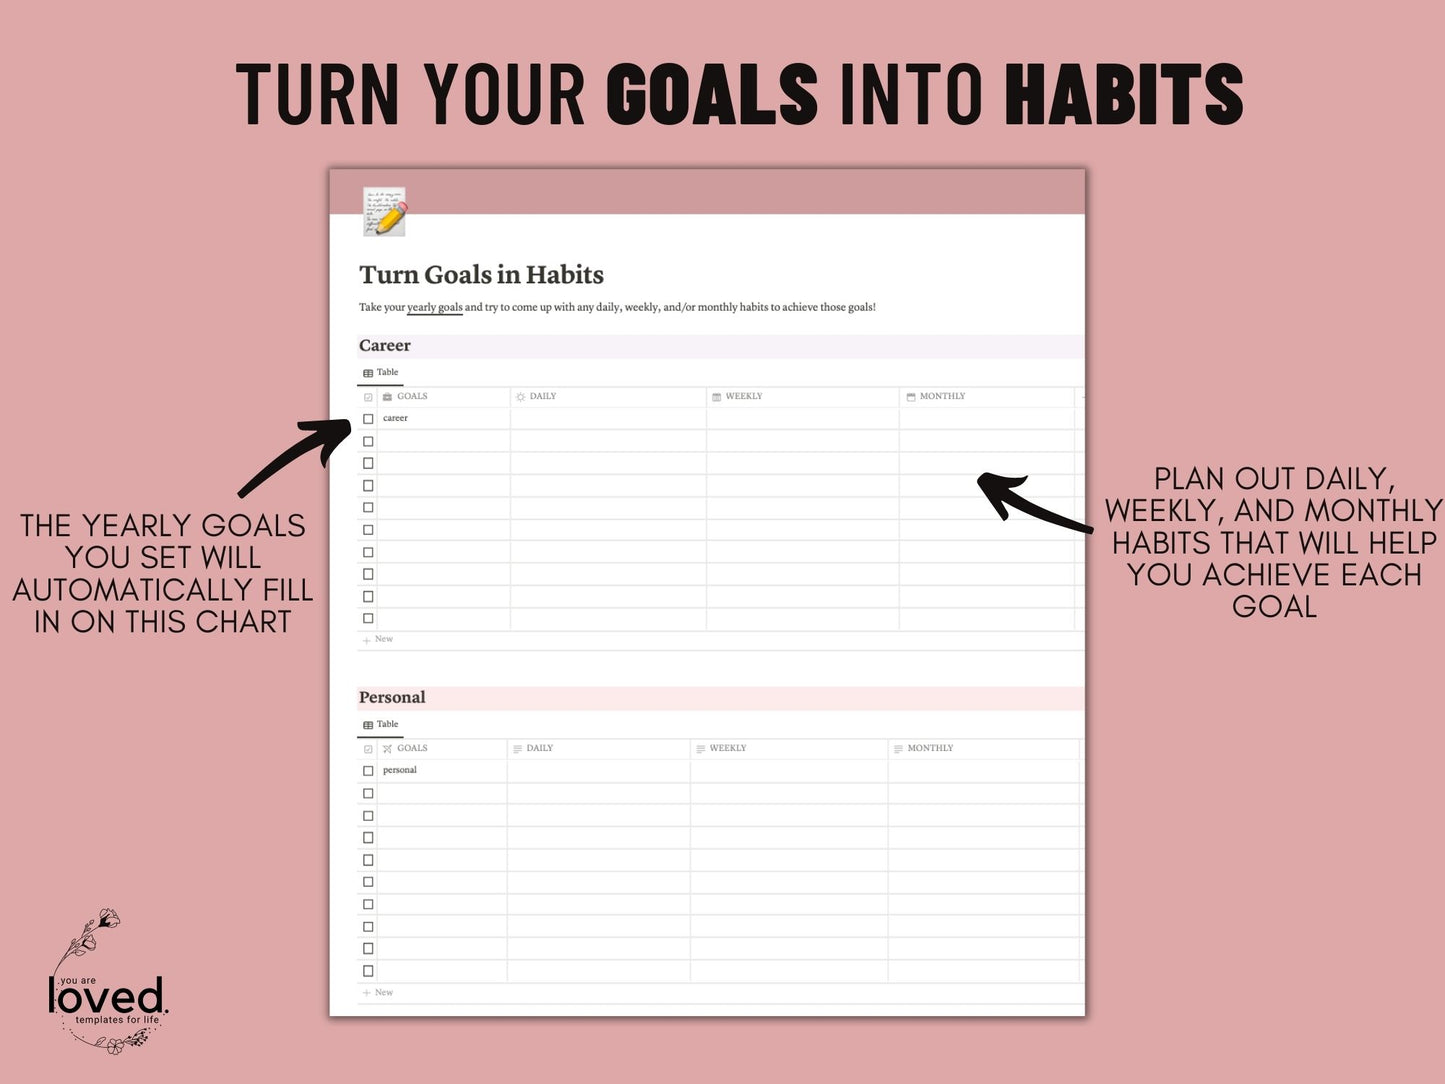 Habit Tracker + Planner | Notion Template